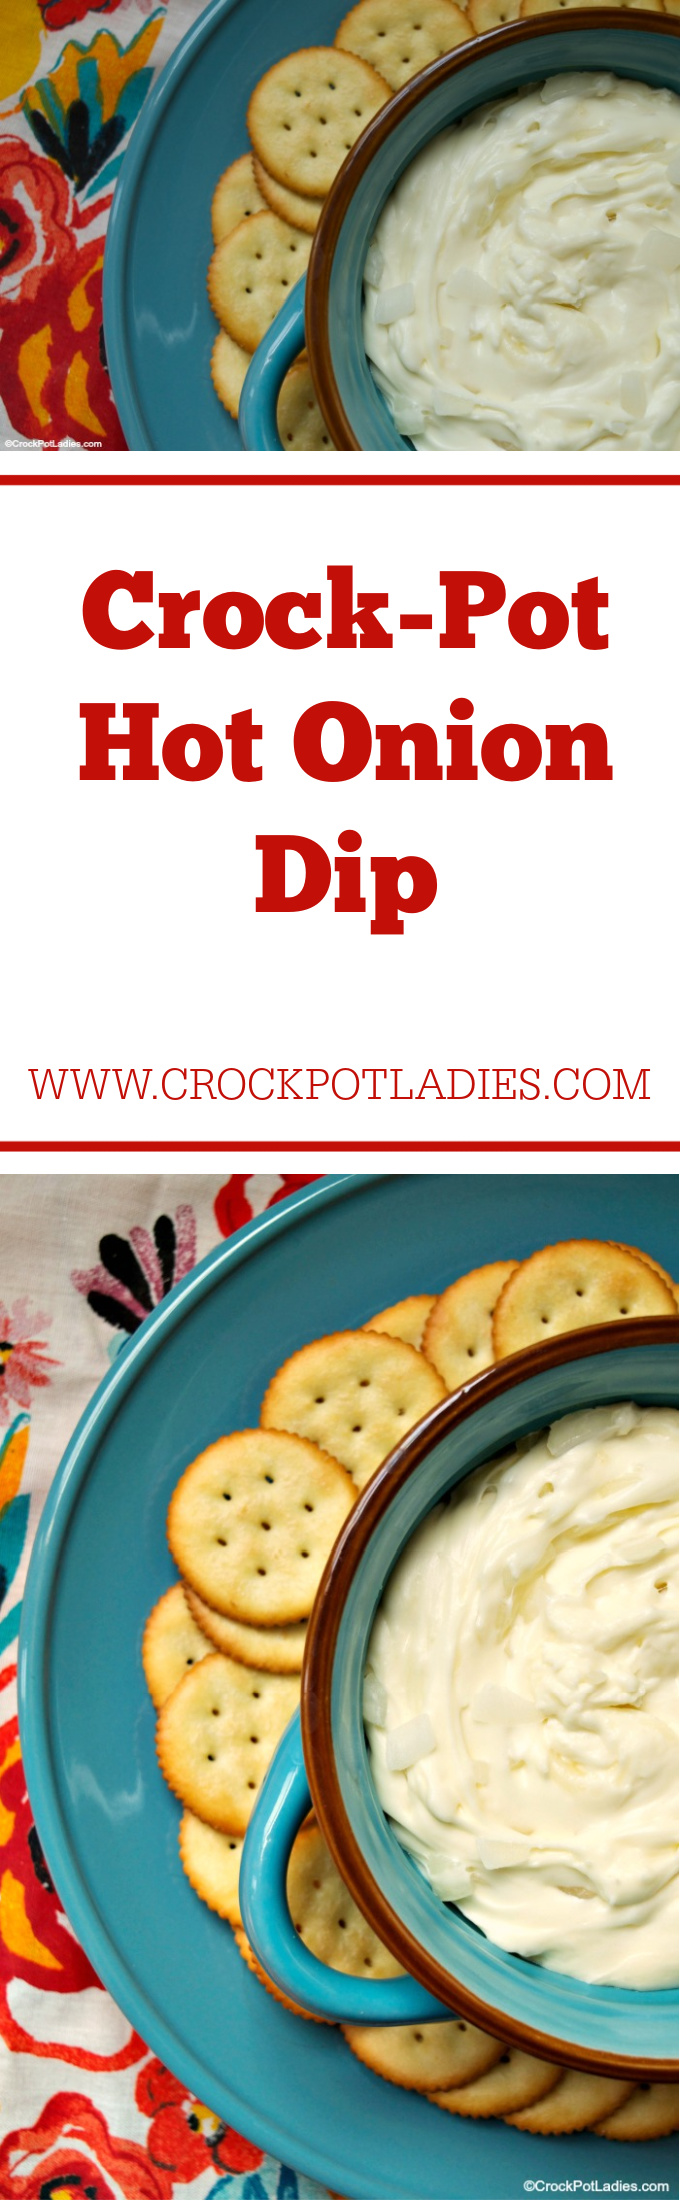 Crock-Pot Hot Onion Dip